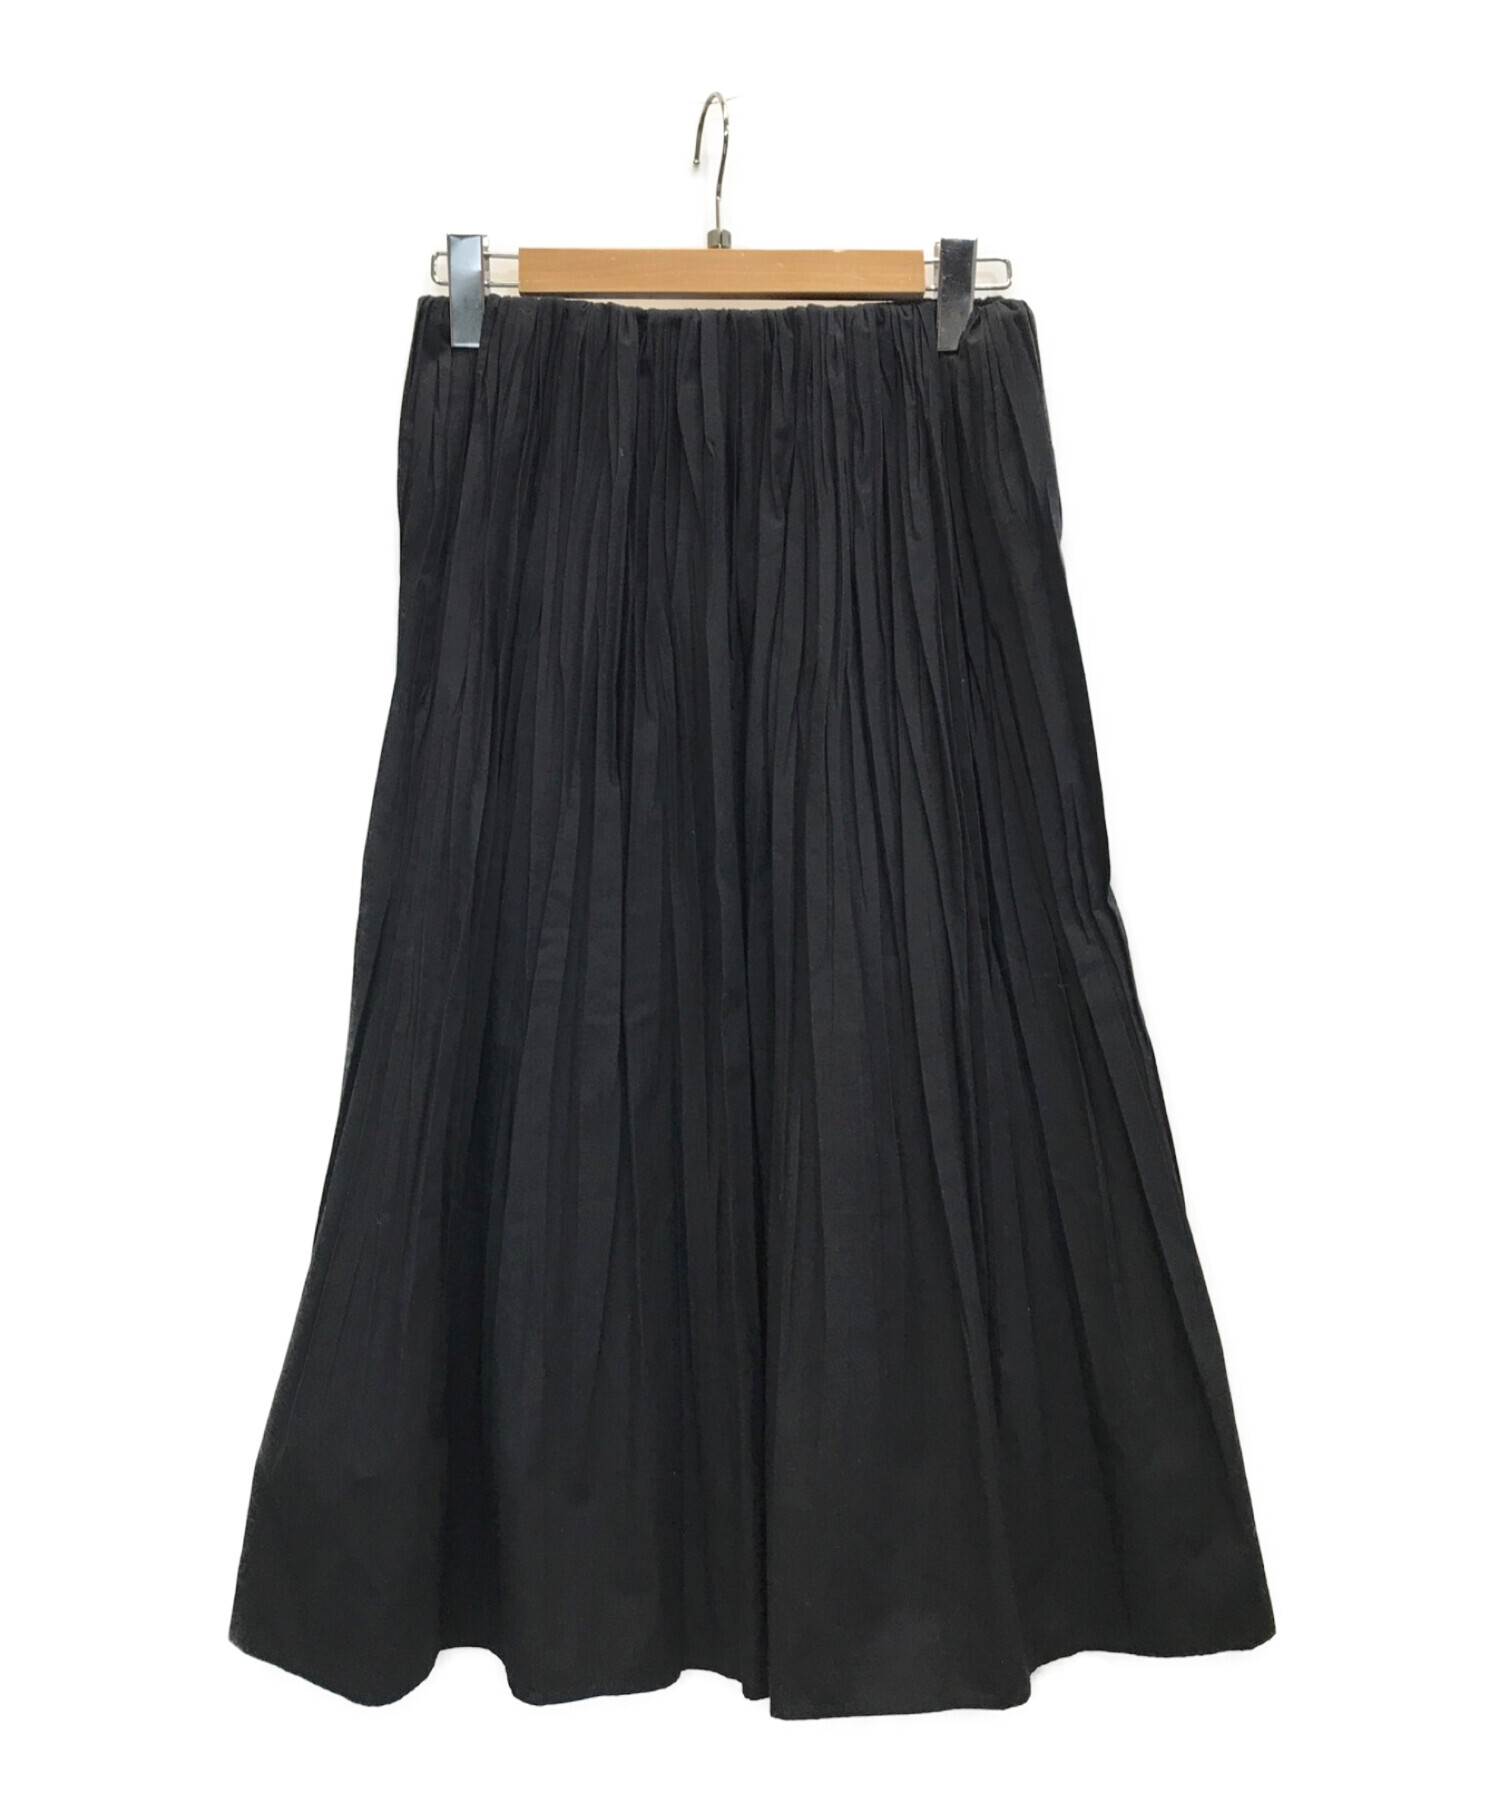 GALERIE VIE (ギャルリーヴィー) コットンリネンポプリン プリーツスカート ブラック サイズ:36 未使用品